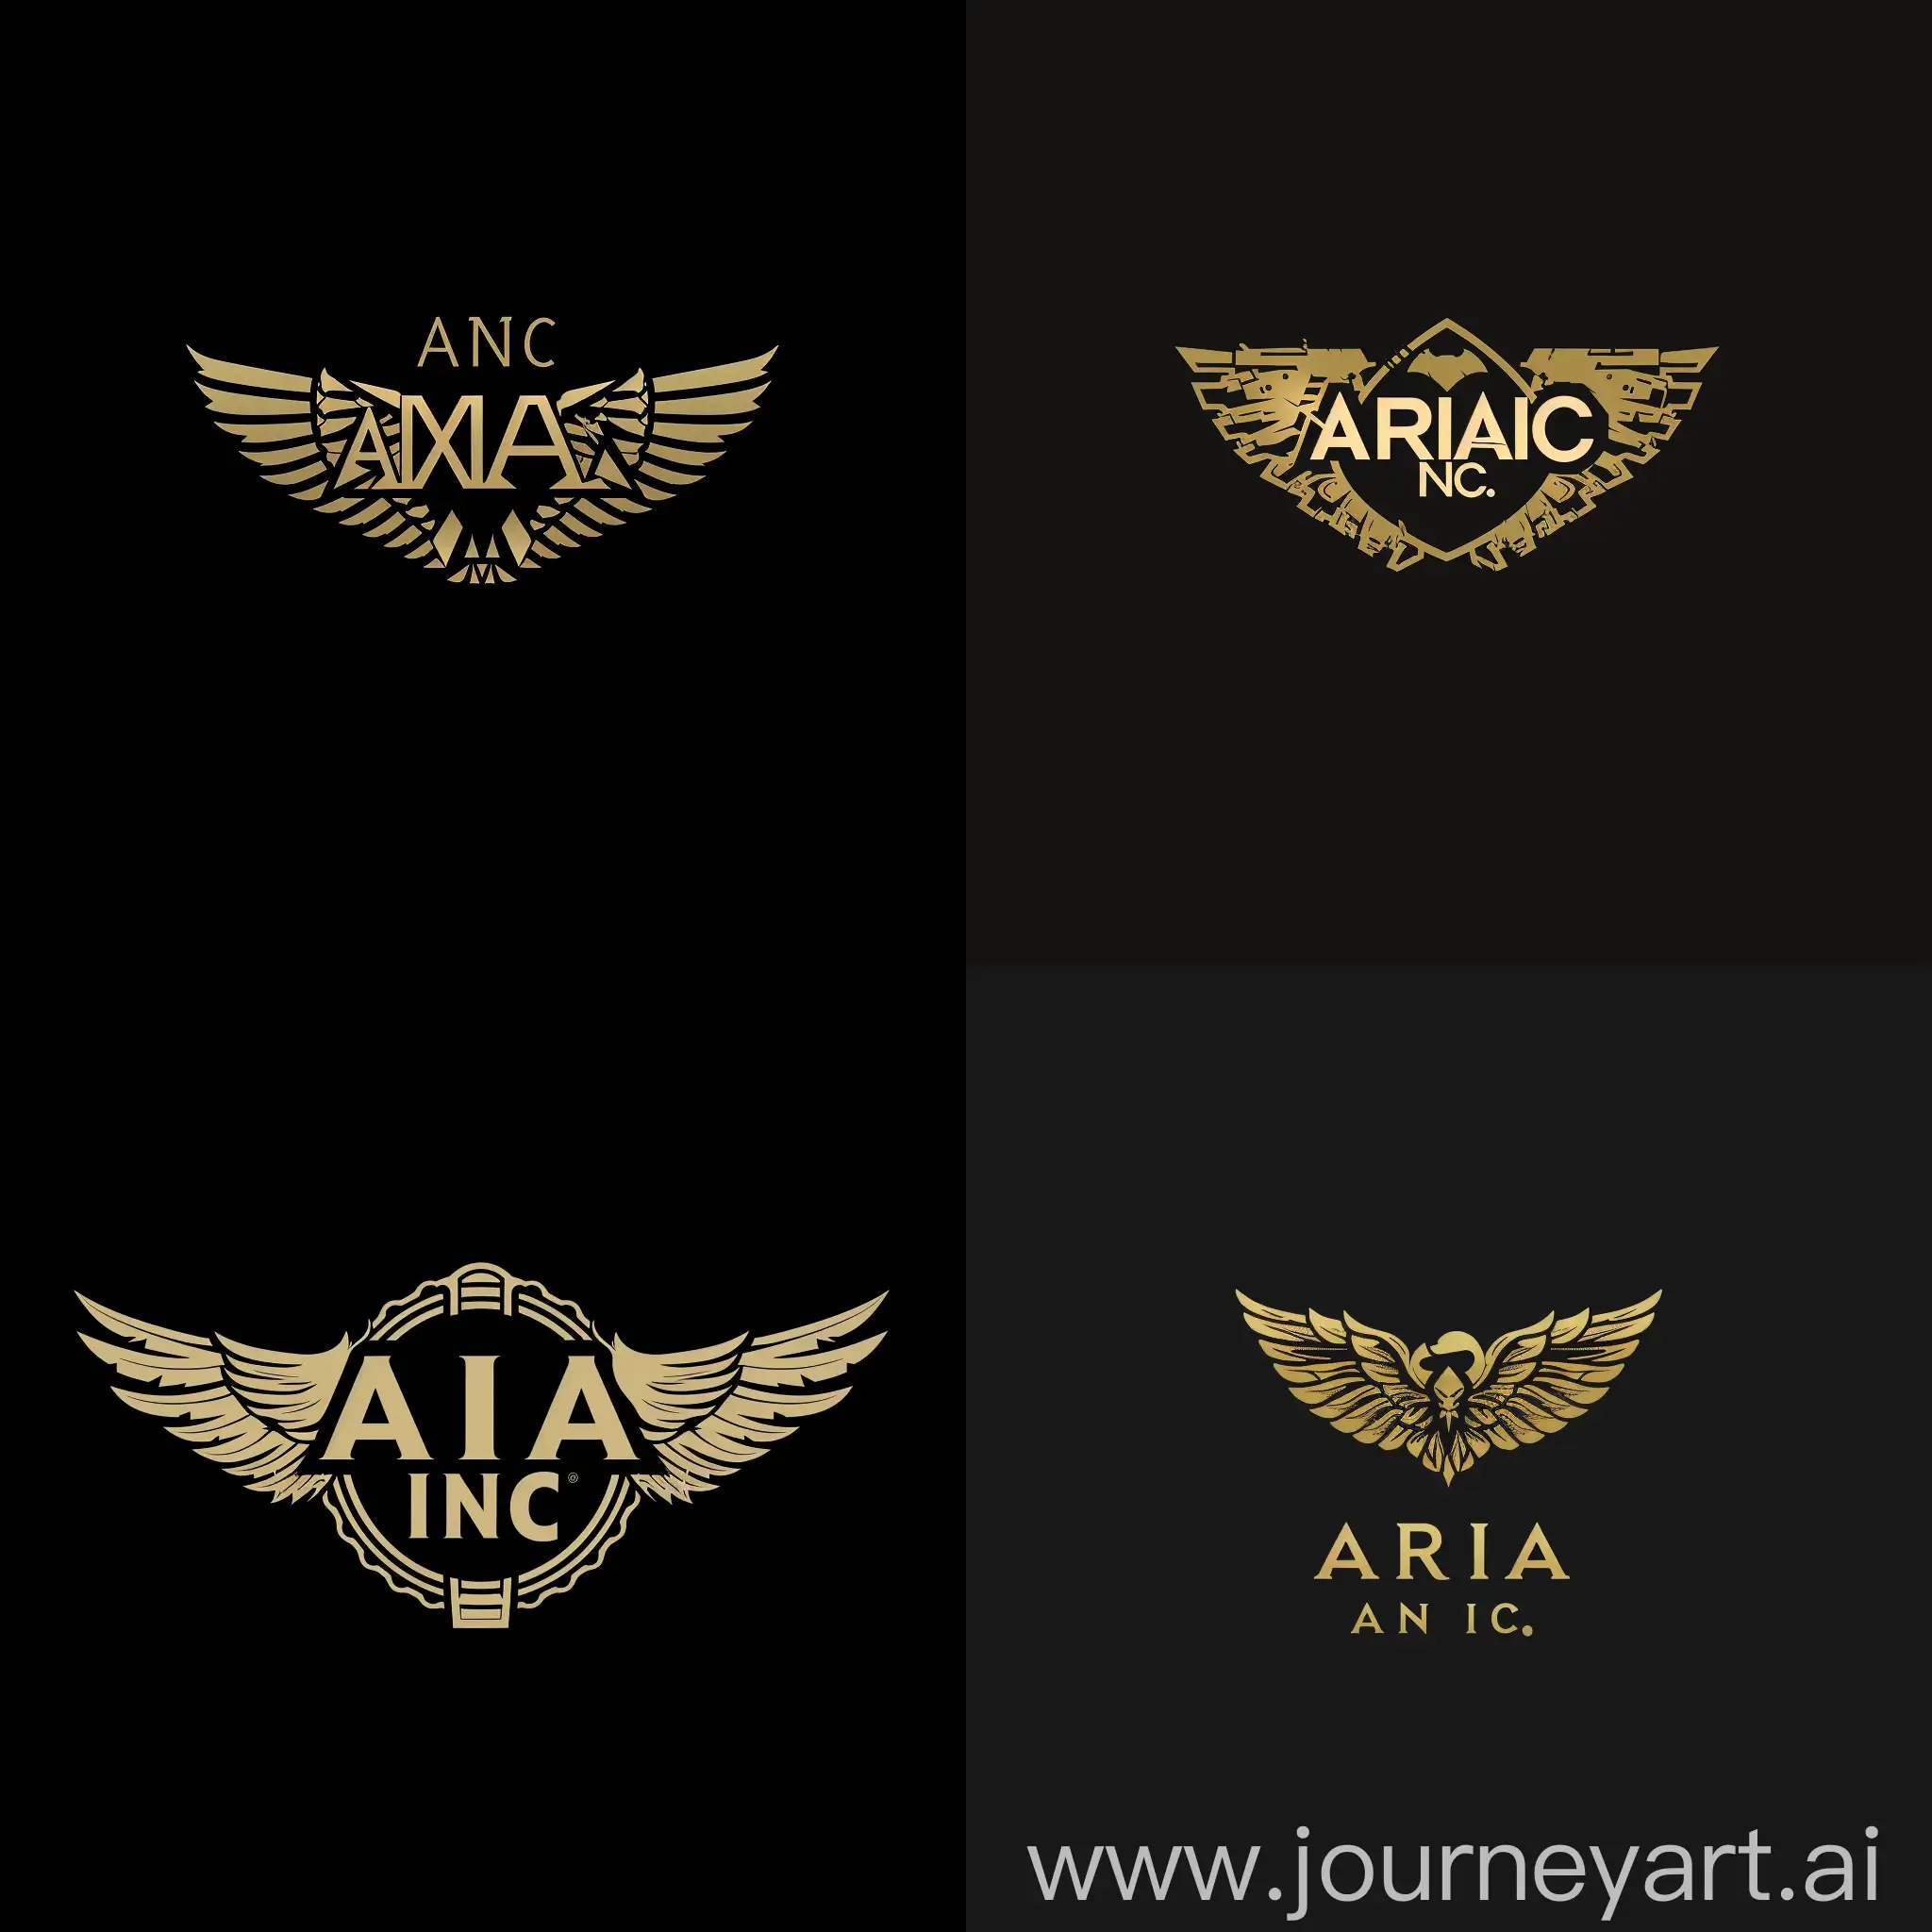 ARIA-INC-Military-Logo-Design-with-Centered-Name